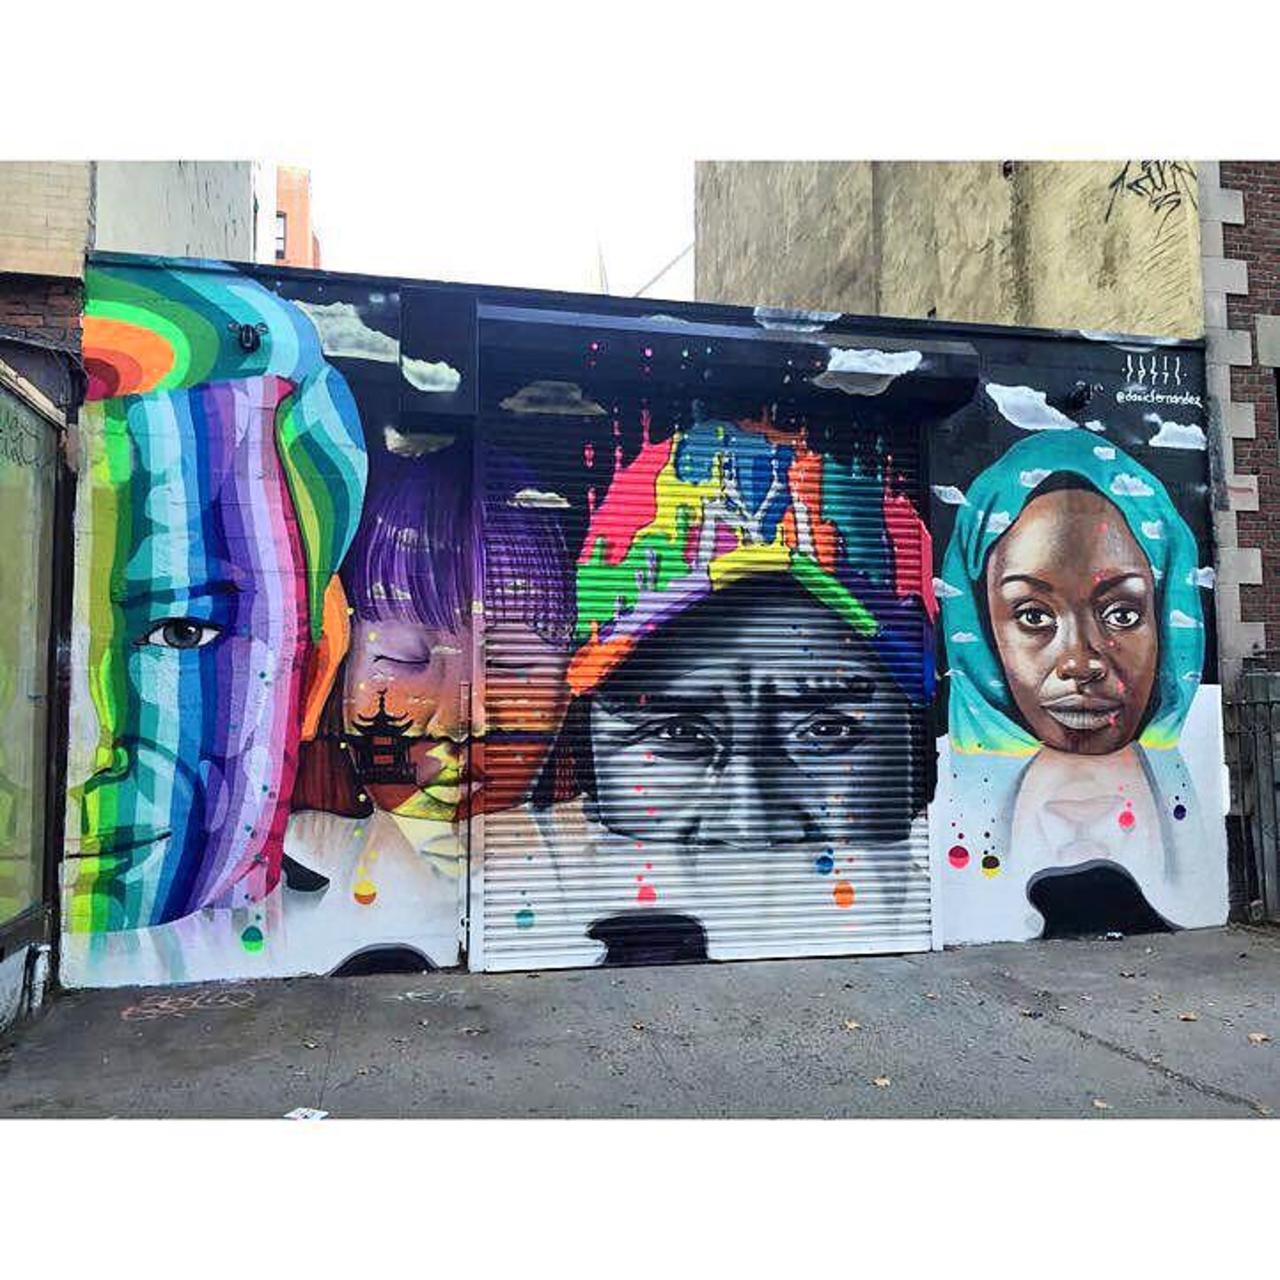 RT @PierreABISAAB: MT @circumjacent: #NewYorkCity #graffiti photo by @j2mz https://instagram.com/p/80Z_YjMC4r/ #StreetArt http://t.co/lJeedUN2Z2